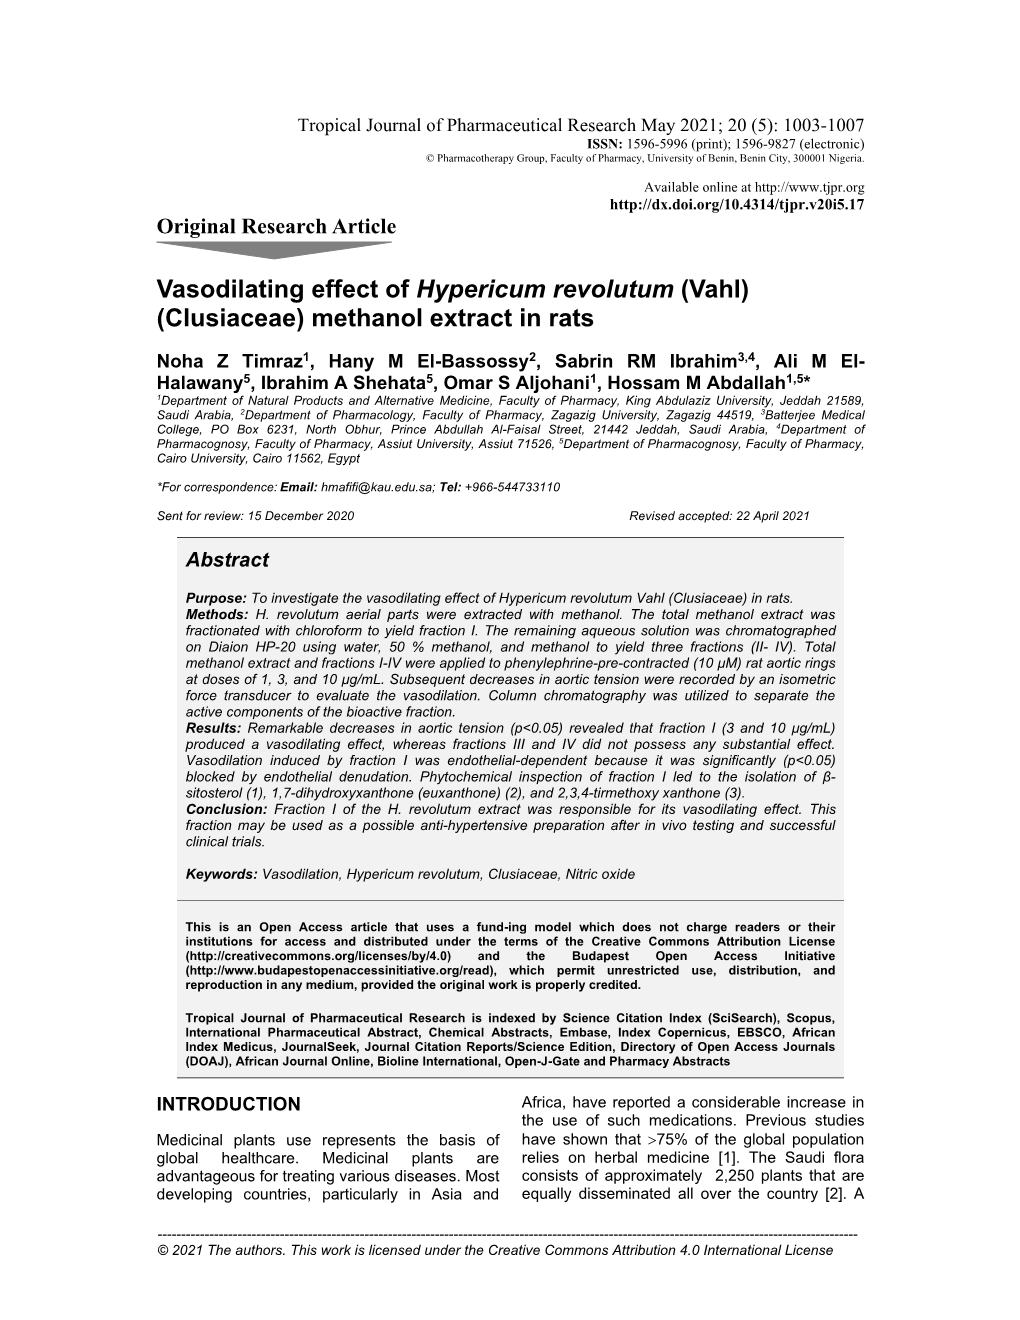 Vasodilating Effect of Hypericum Revolutum (Vahl) (Clusiaceae) Methanol Extract in Rats